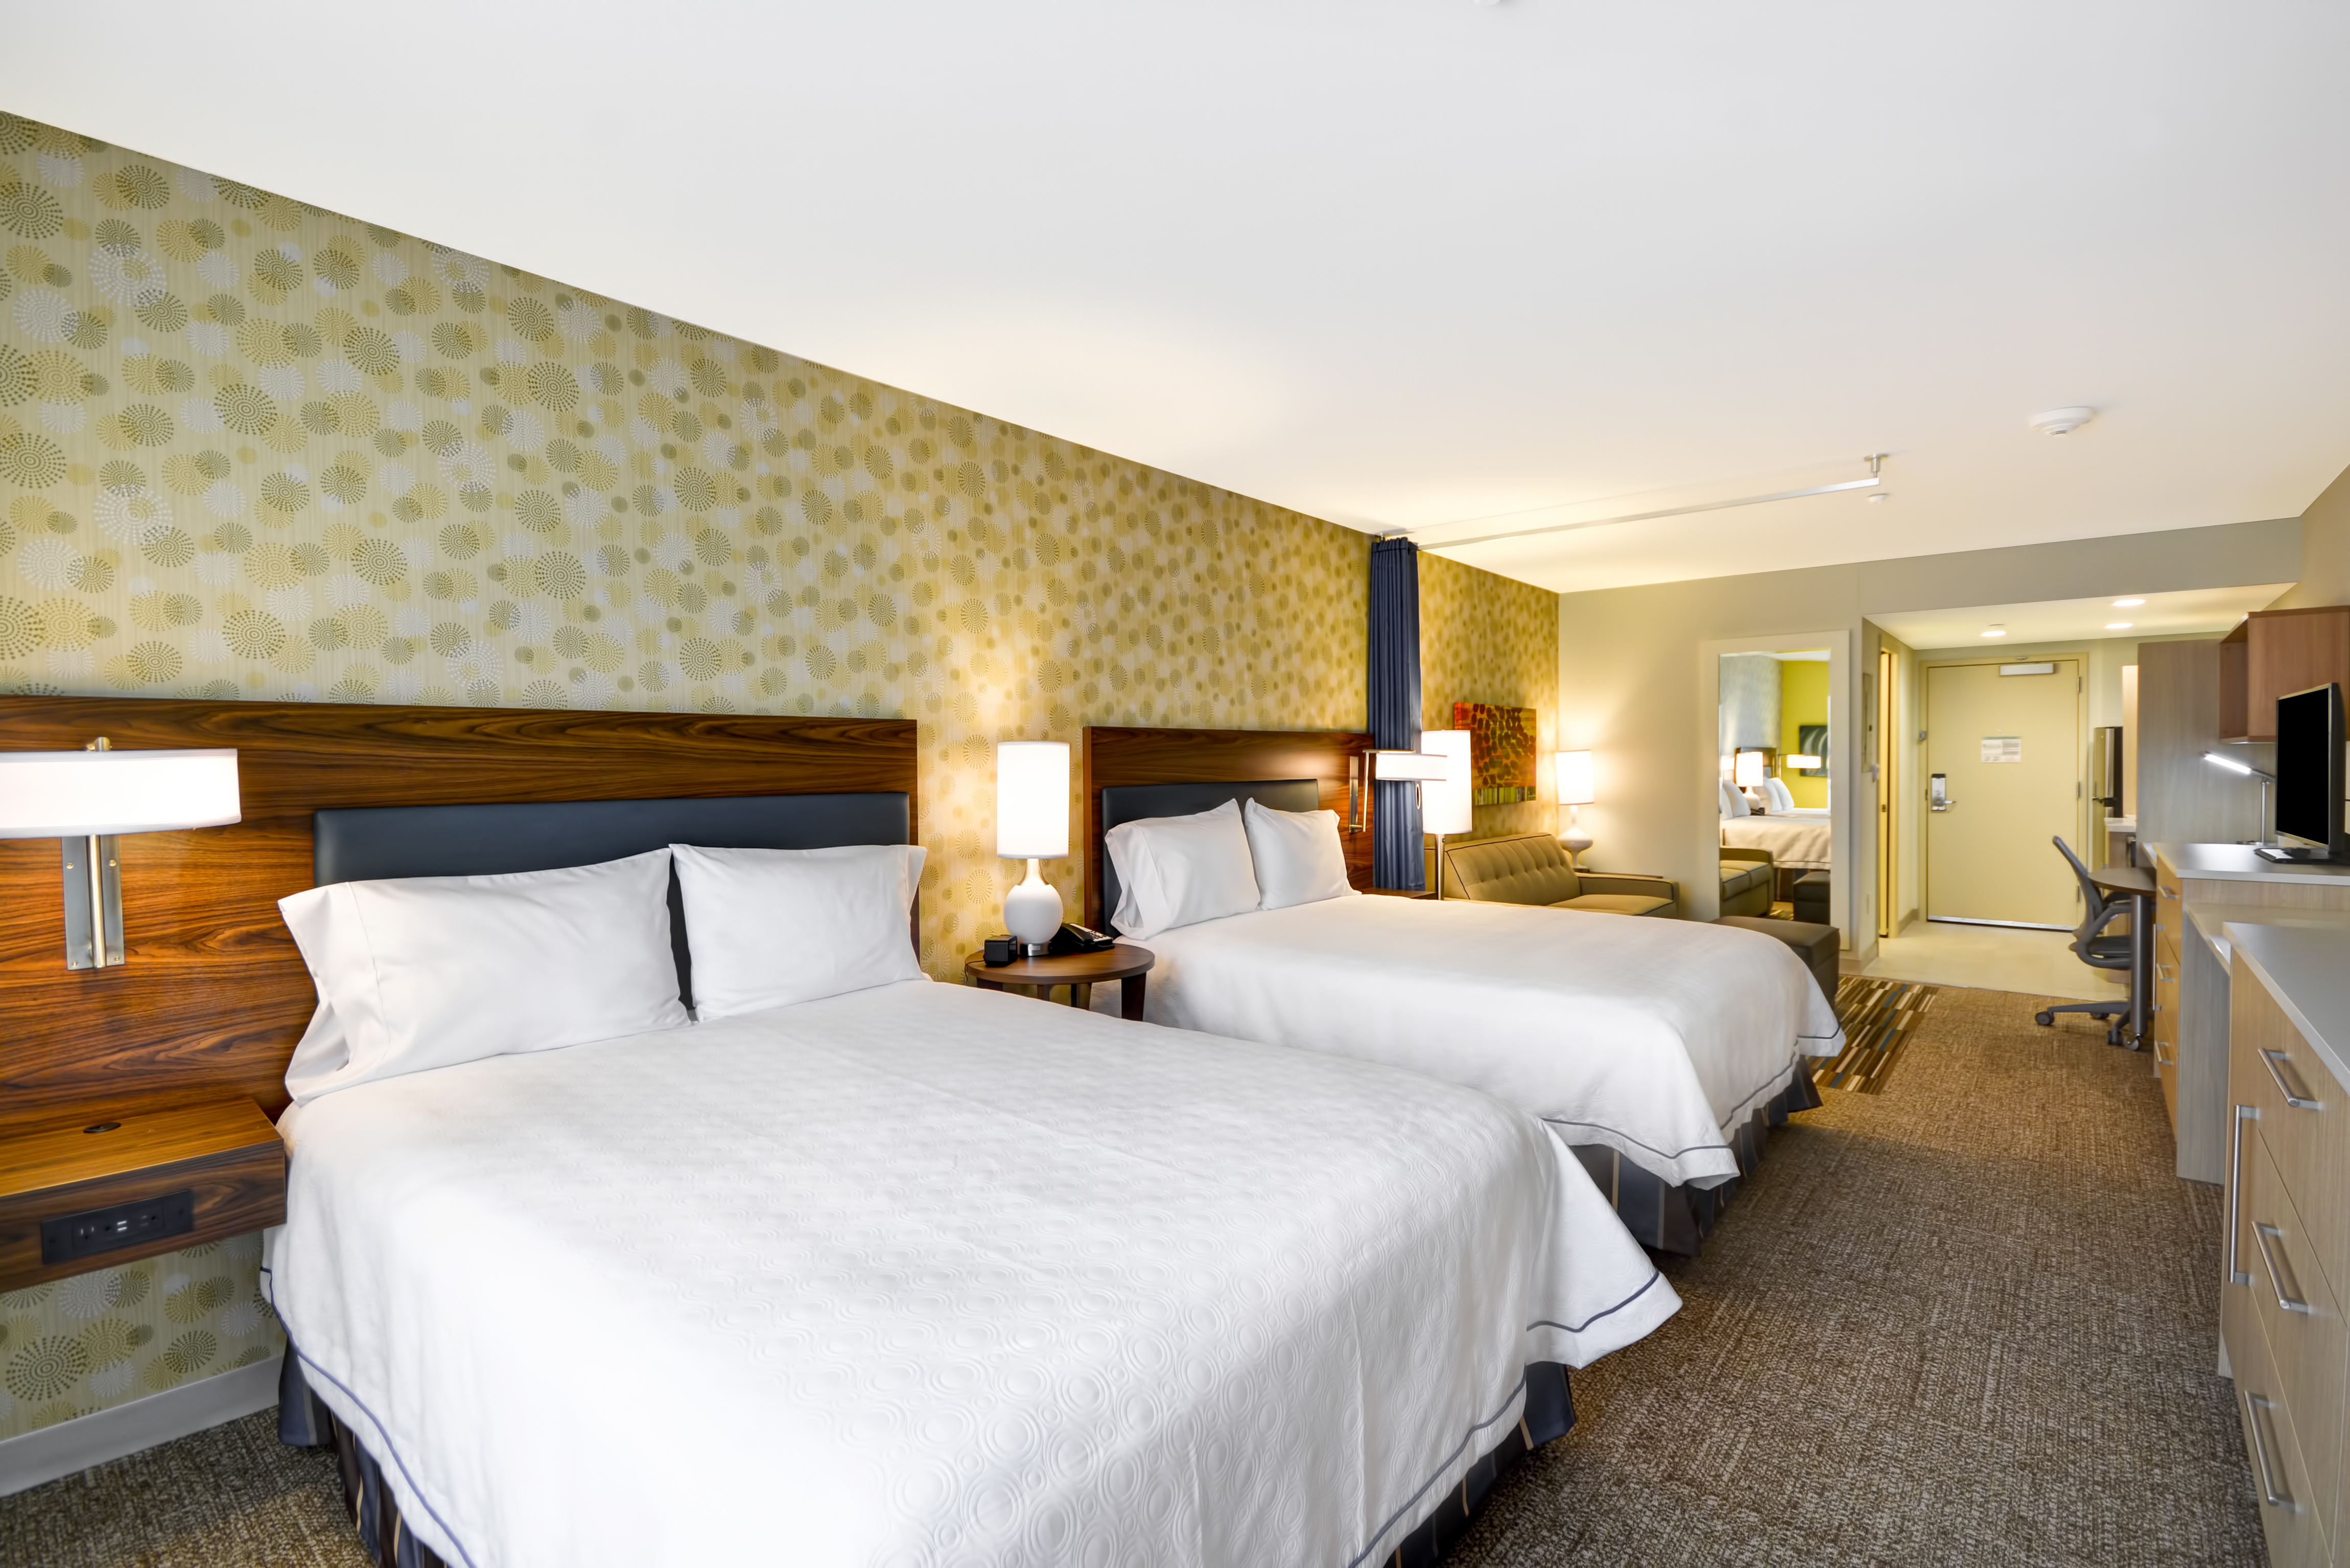 Home2 Suites by Hilton Opelika Auburn Hotel, AL - 2 Queen Studio Beds